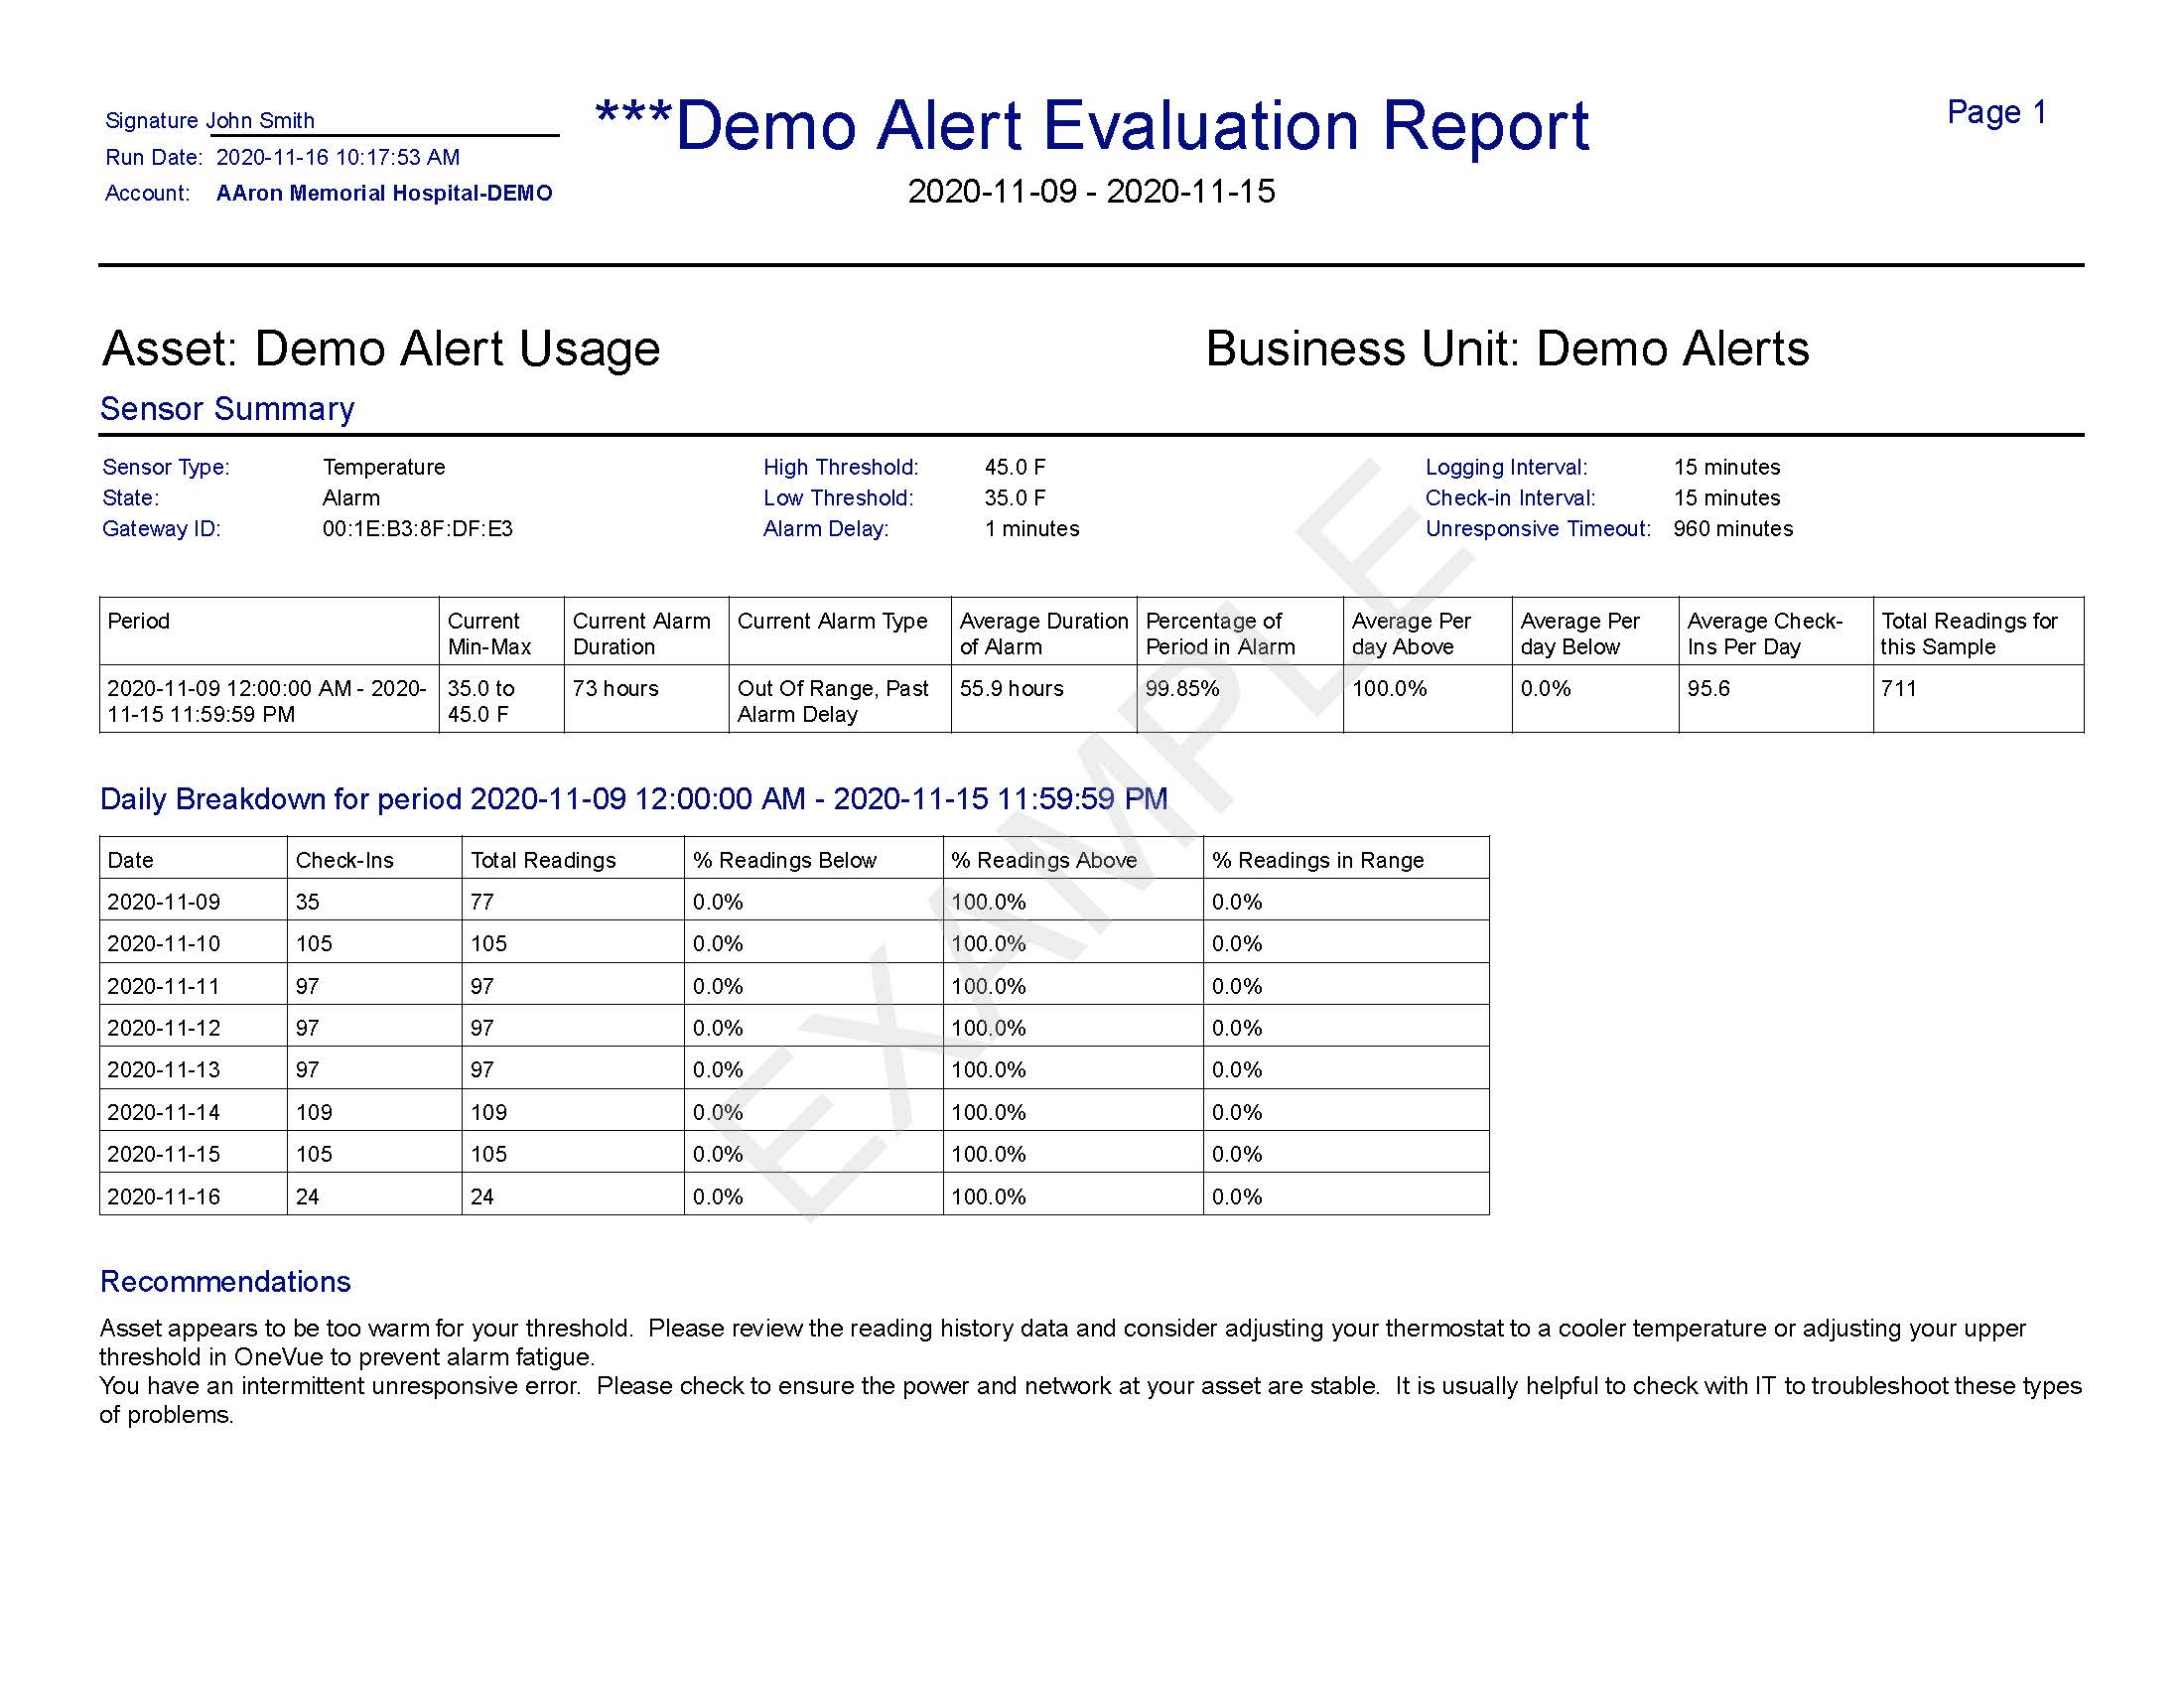 alert-evaluation-report-example.pdf